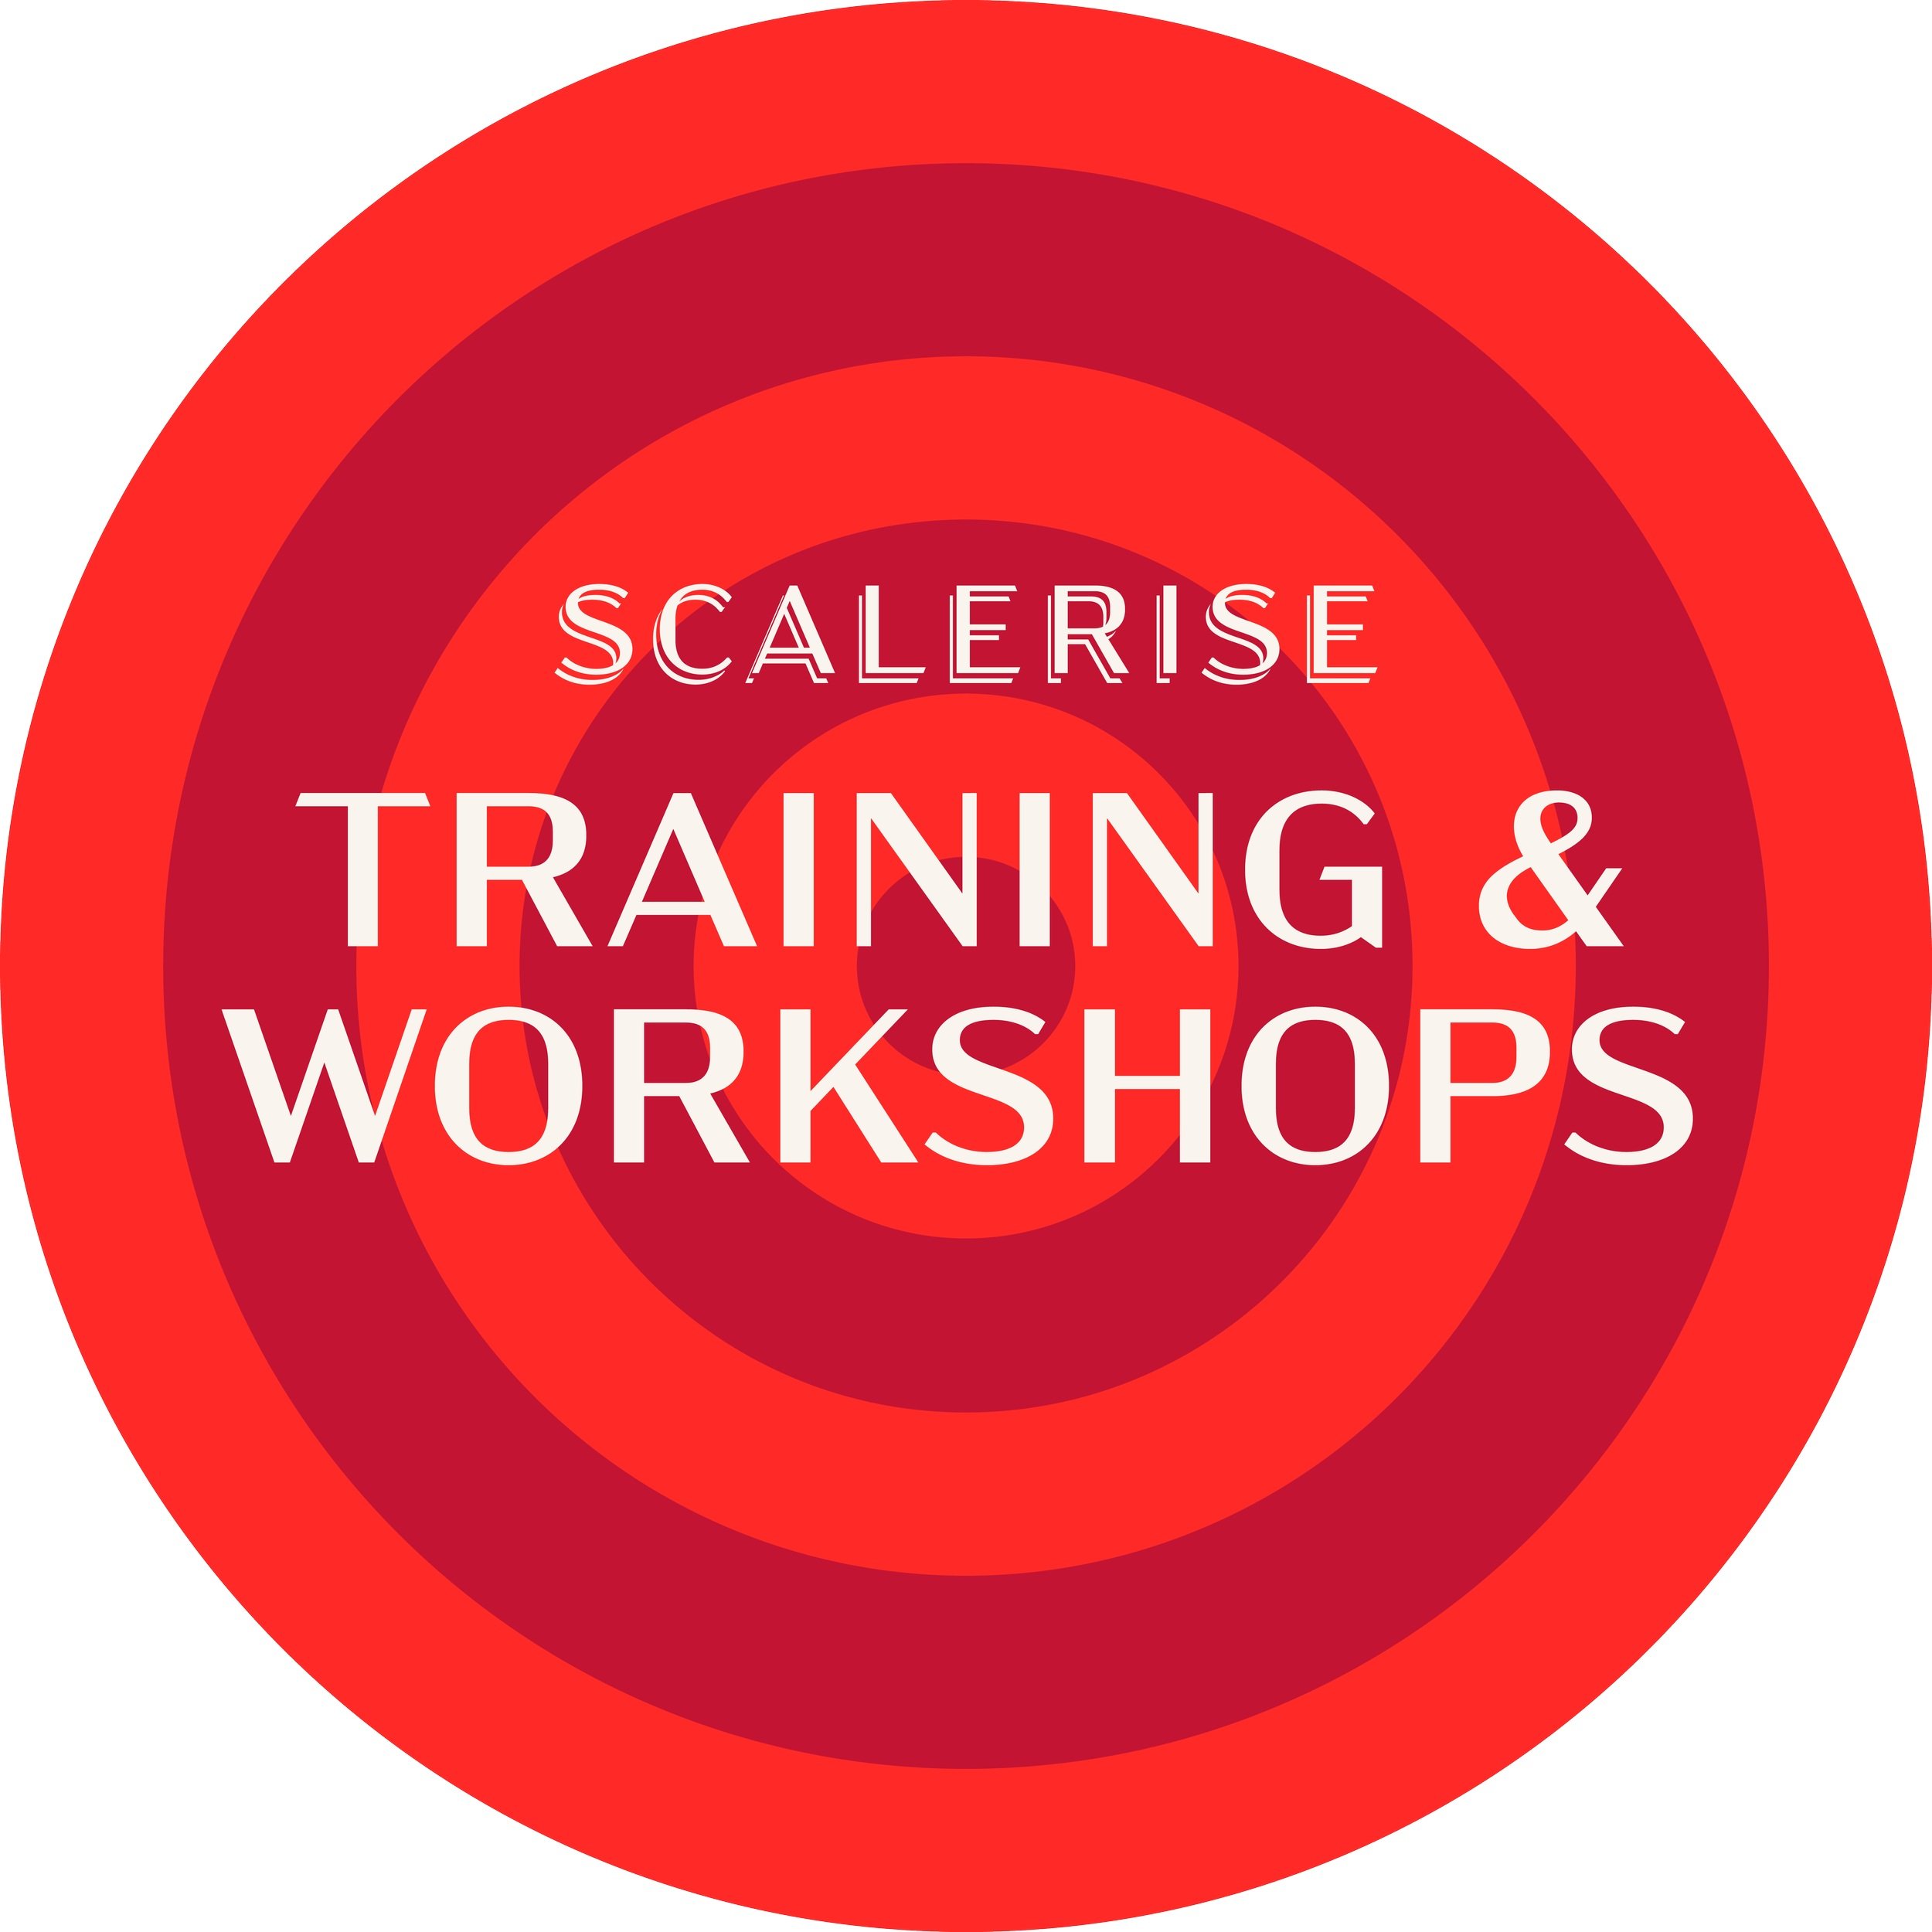 scalerise-training-workshops-botton.jpg